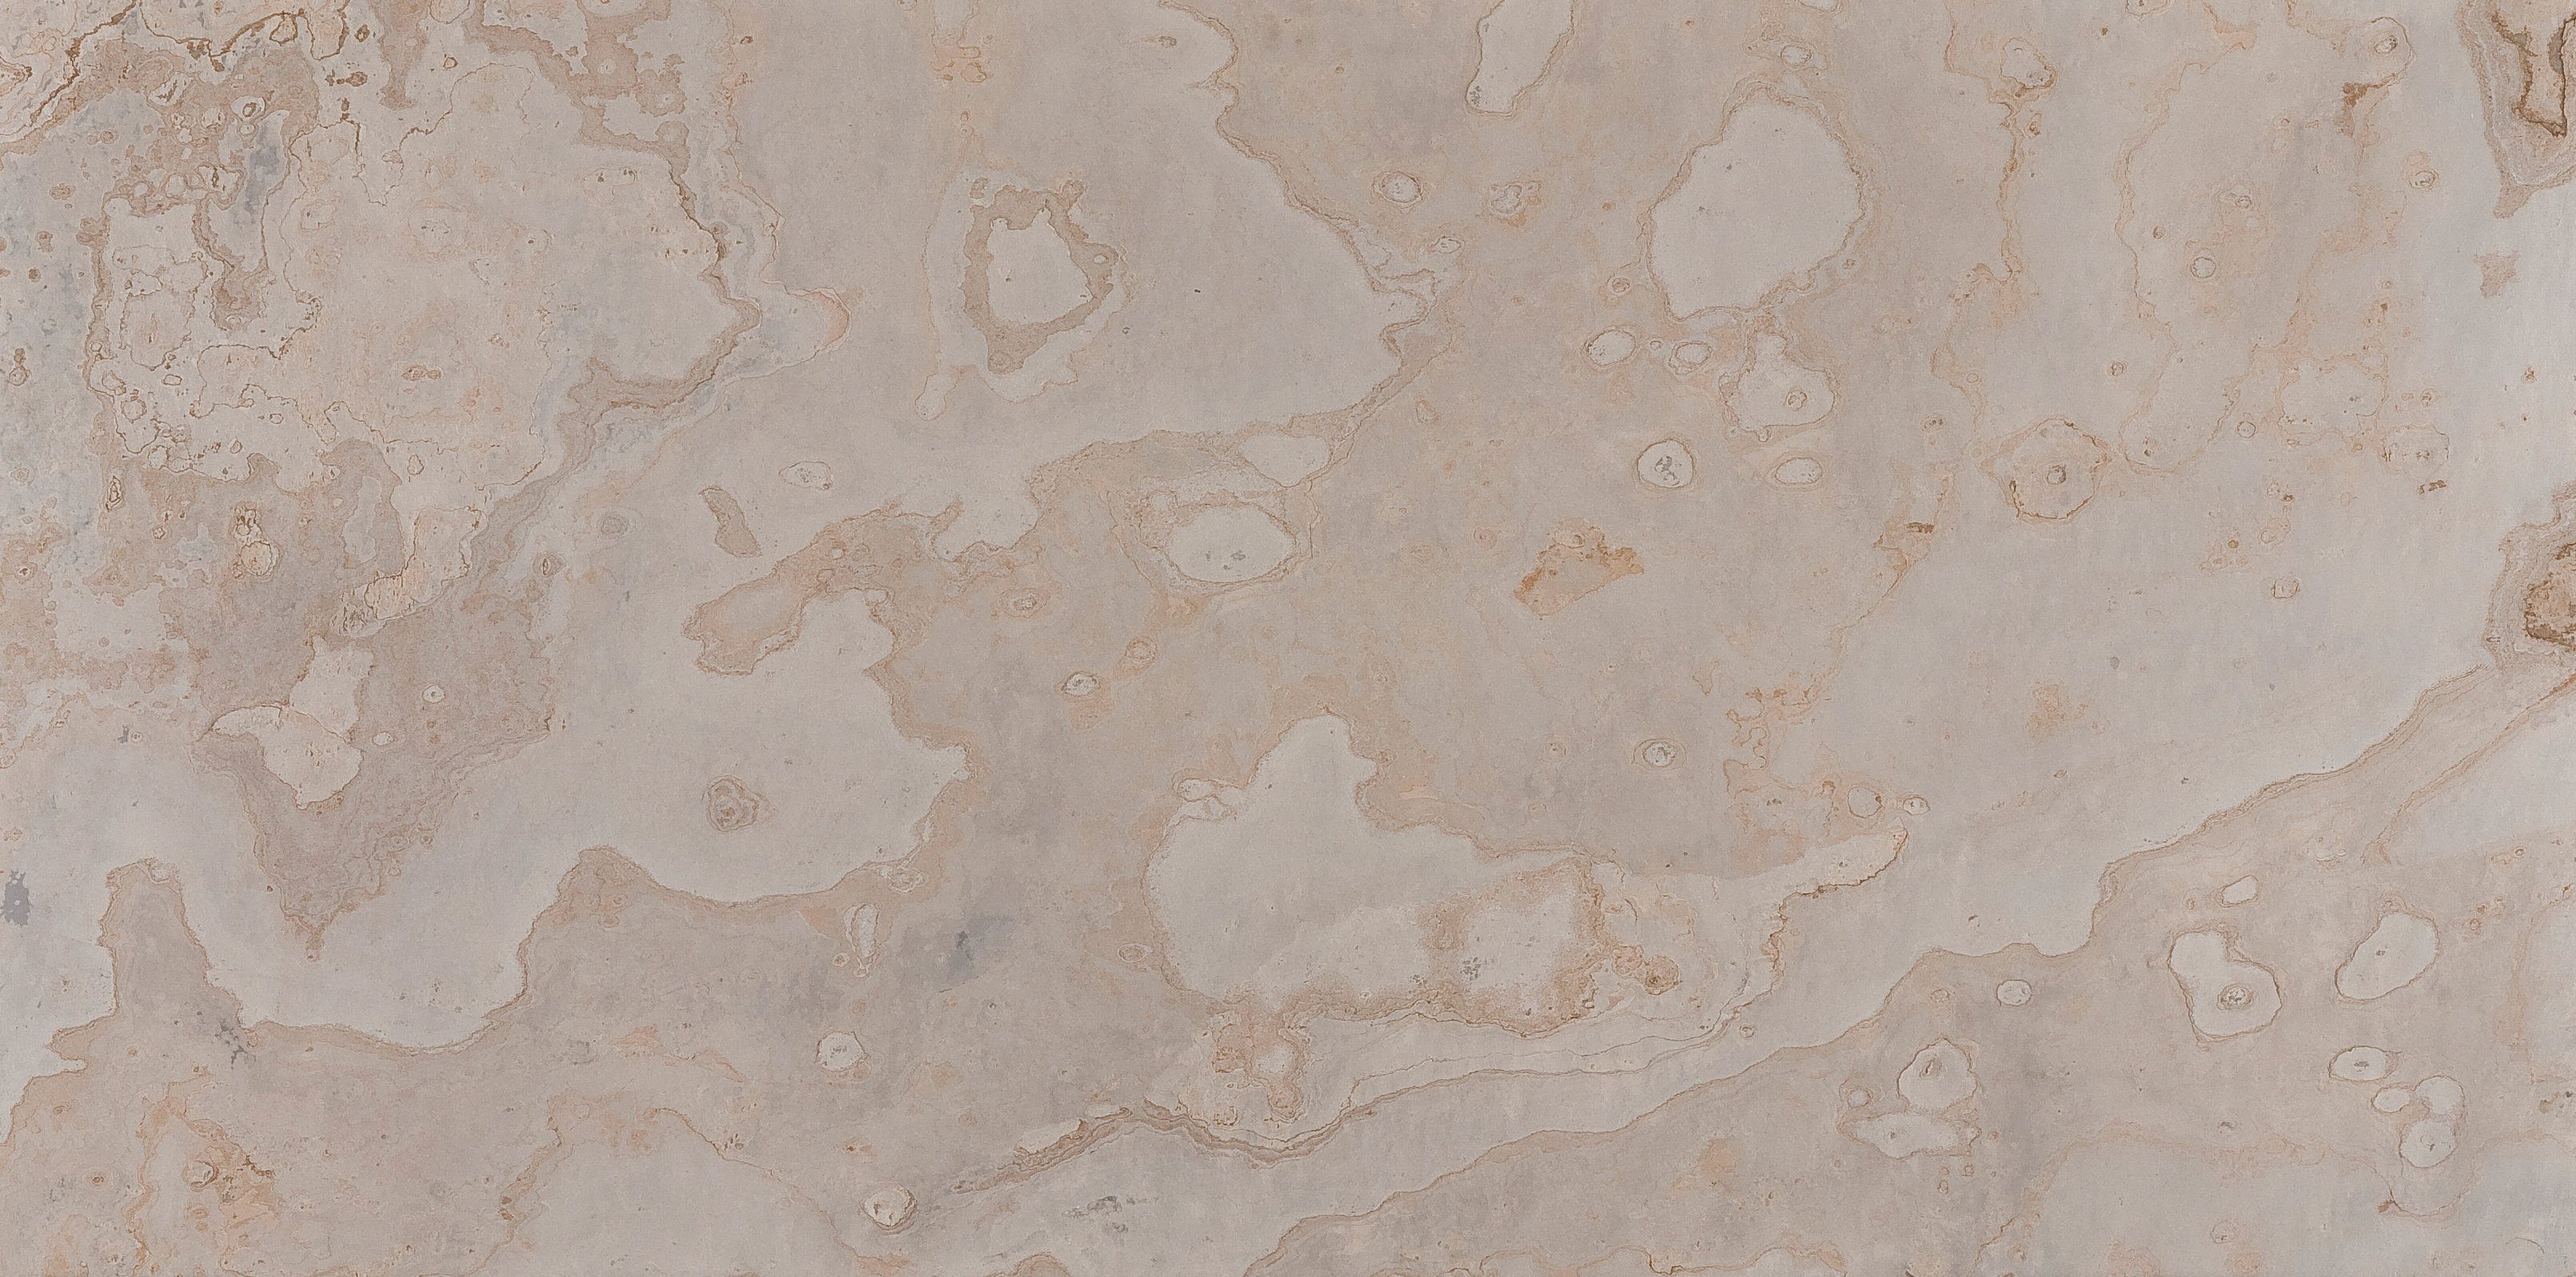 Slate Lite Dekorpaneele Tan, BxL: 120x240 cm, 2,88 qm, (1-tlg) aus Naturstein